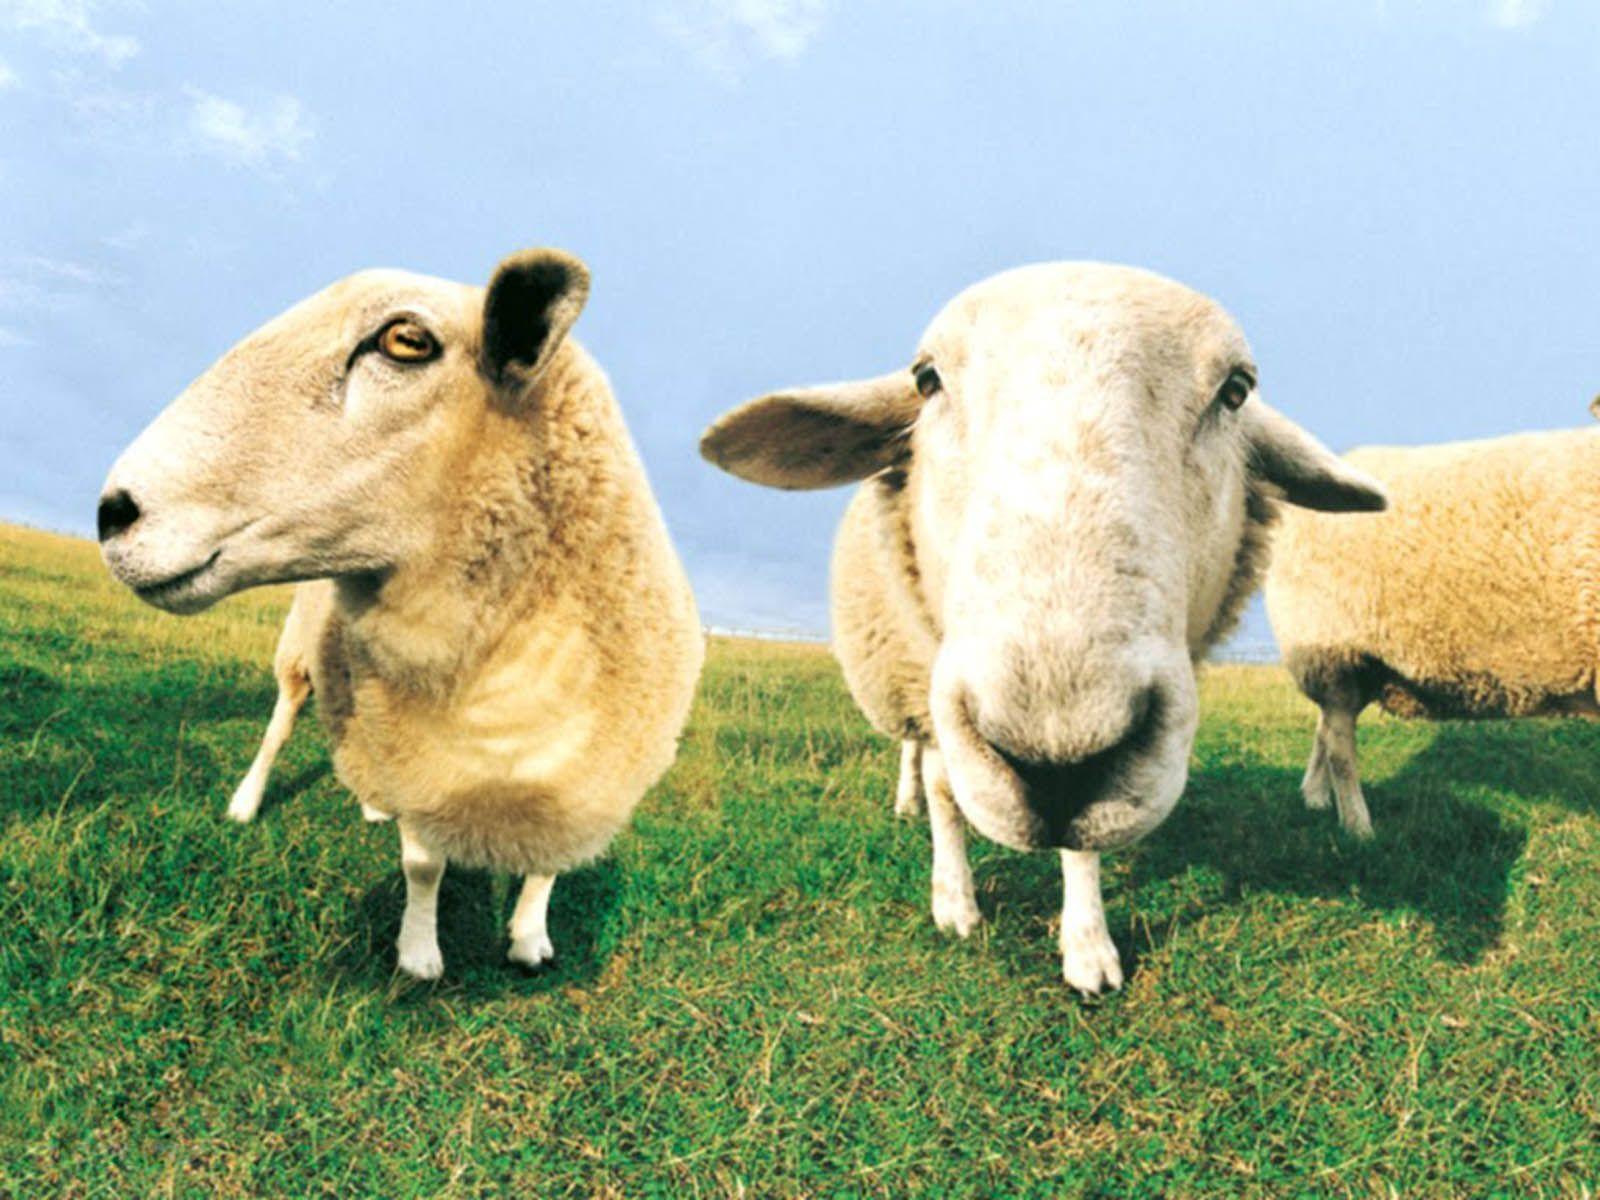 Two sheep in a field - Farm